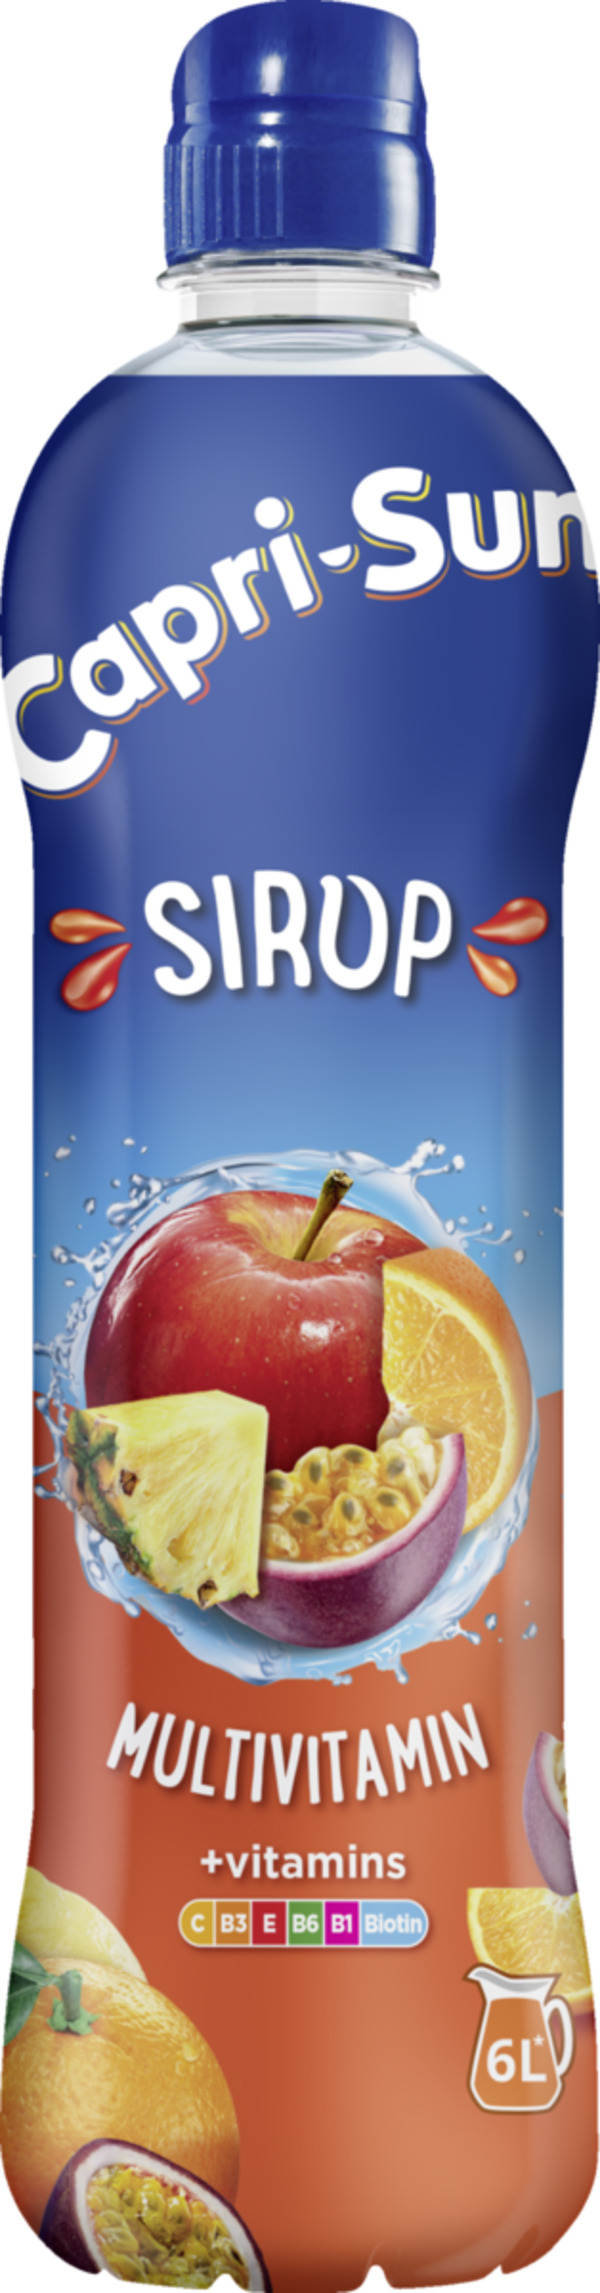 Bild 1 von Capri-Sun Sirup + Vitamine Multivitamin, 600 ml